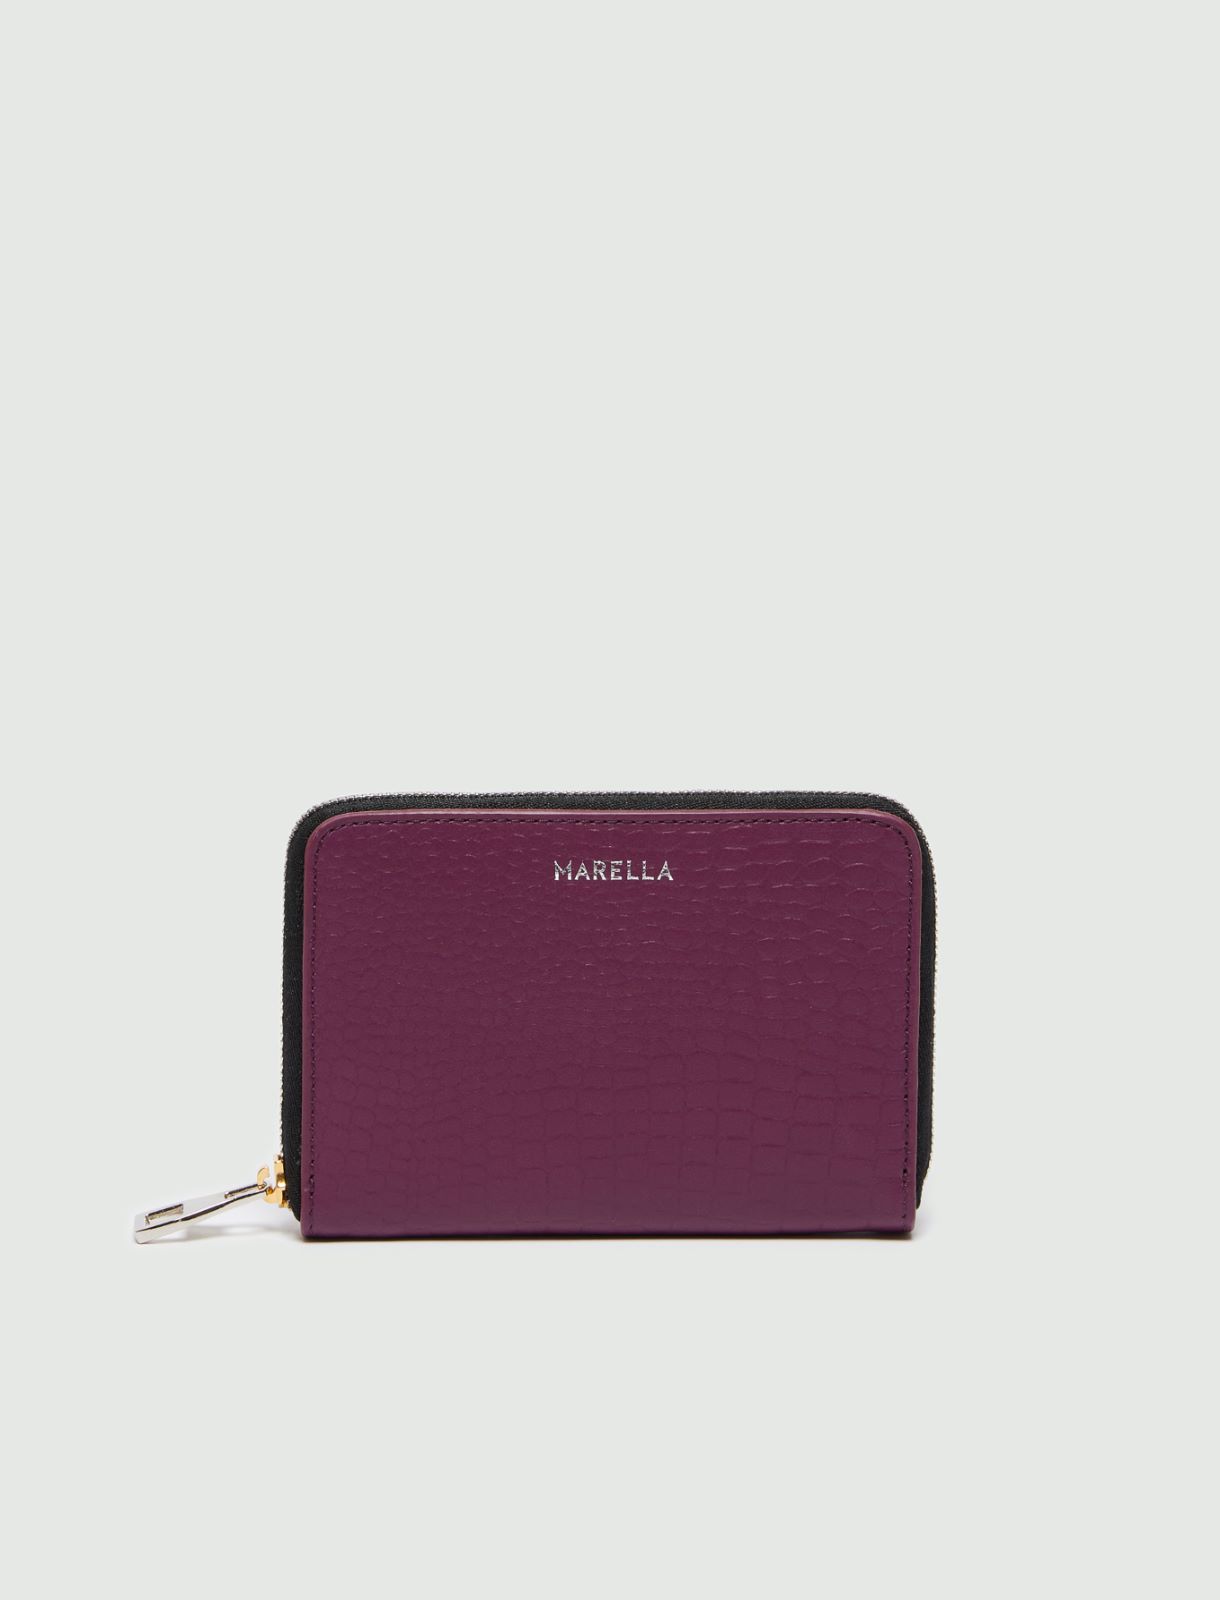 Leather purse - Must - Marella - 2